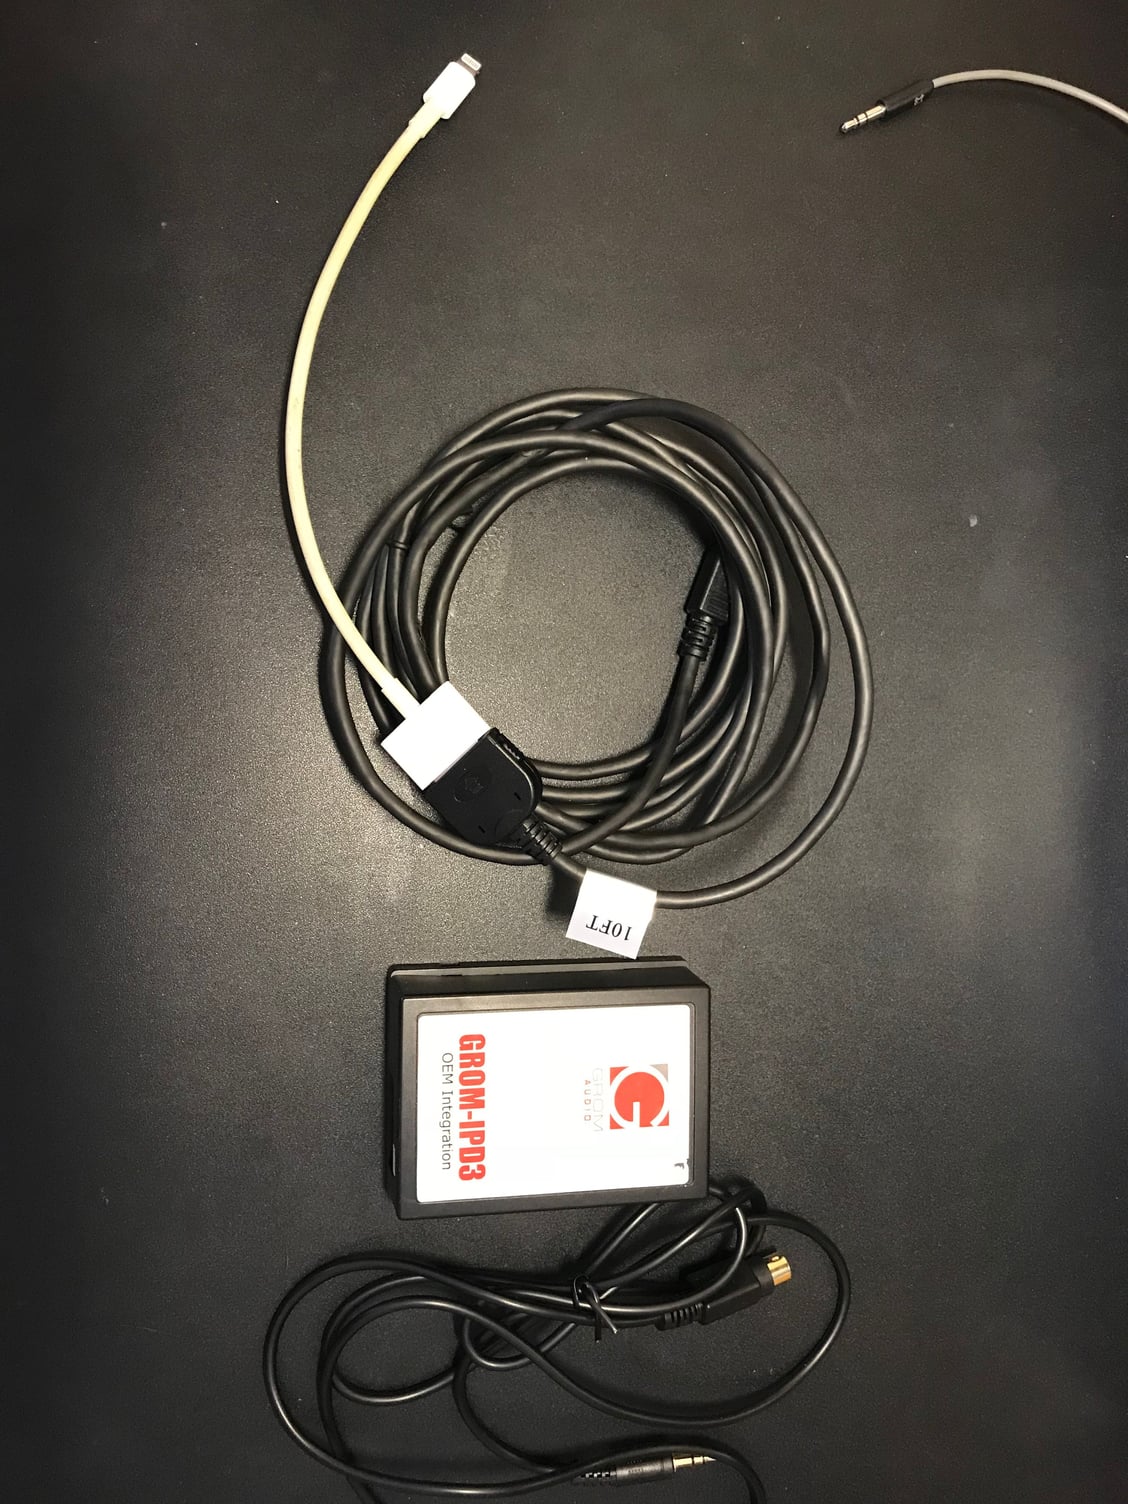 Audio Video/Electronics - GROM IPD3 Ipod module $10 - Used - Anaheim, CA 92804, United States